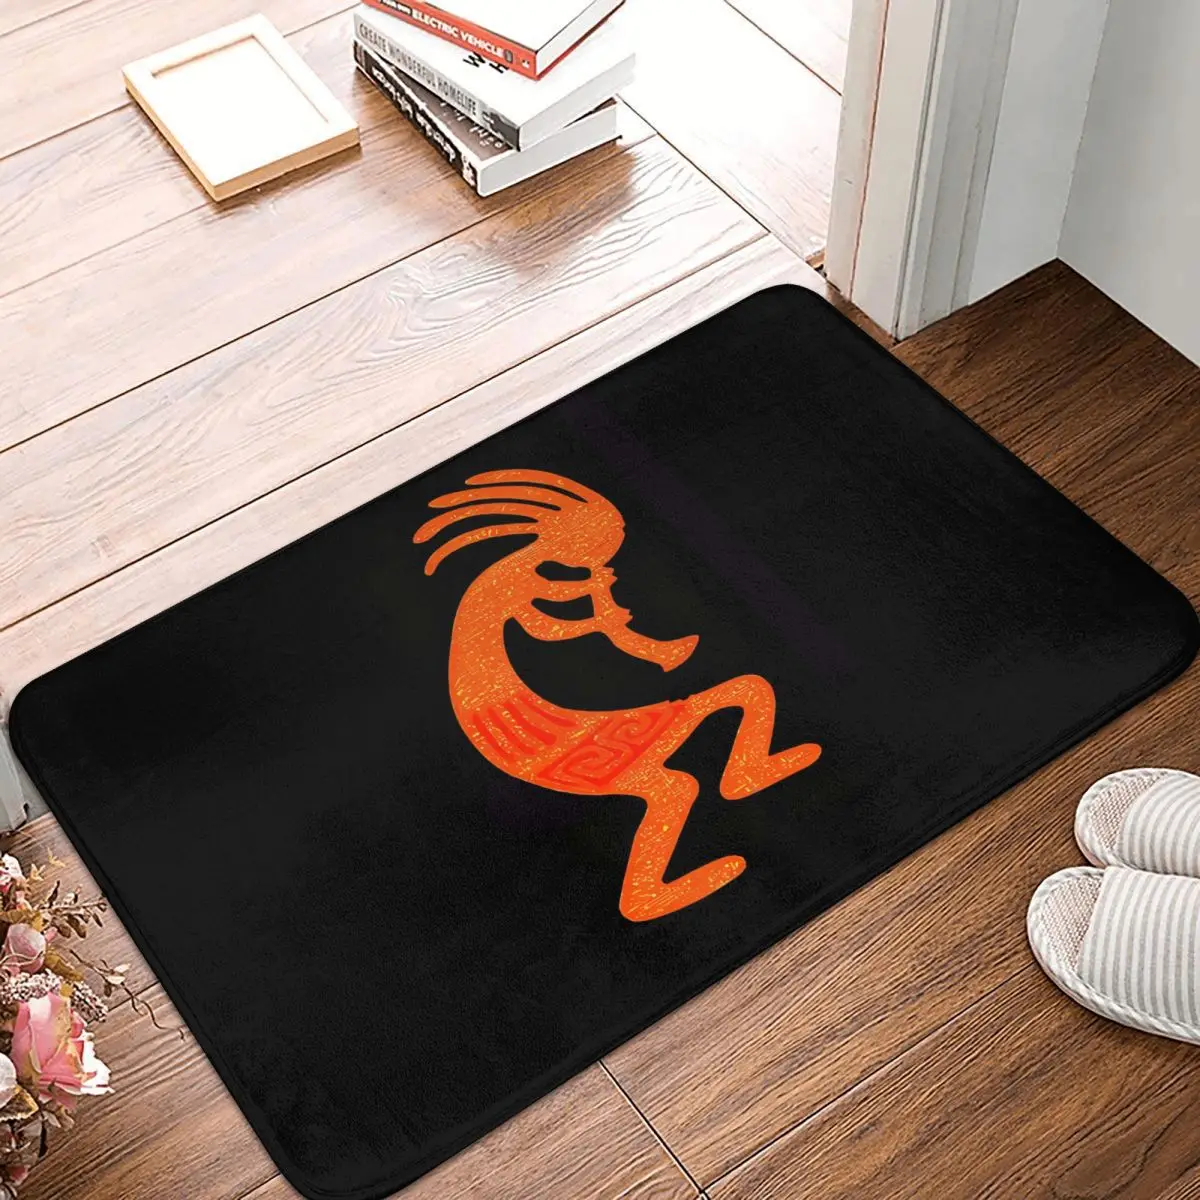 Kokopelli Hopi Bathroom Mat Spiritual Melody Doormat Living Room Carpet Outdoor Rug Home Decor